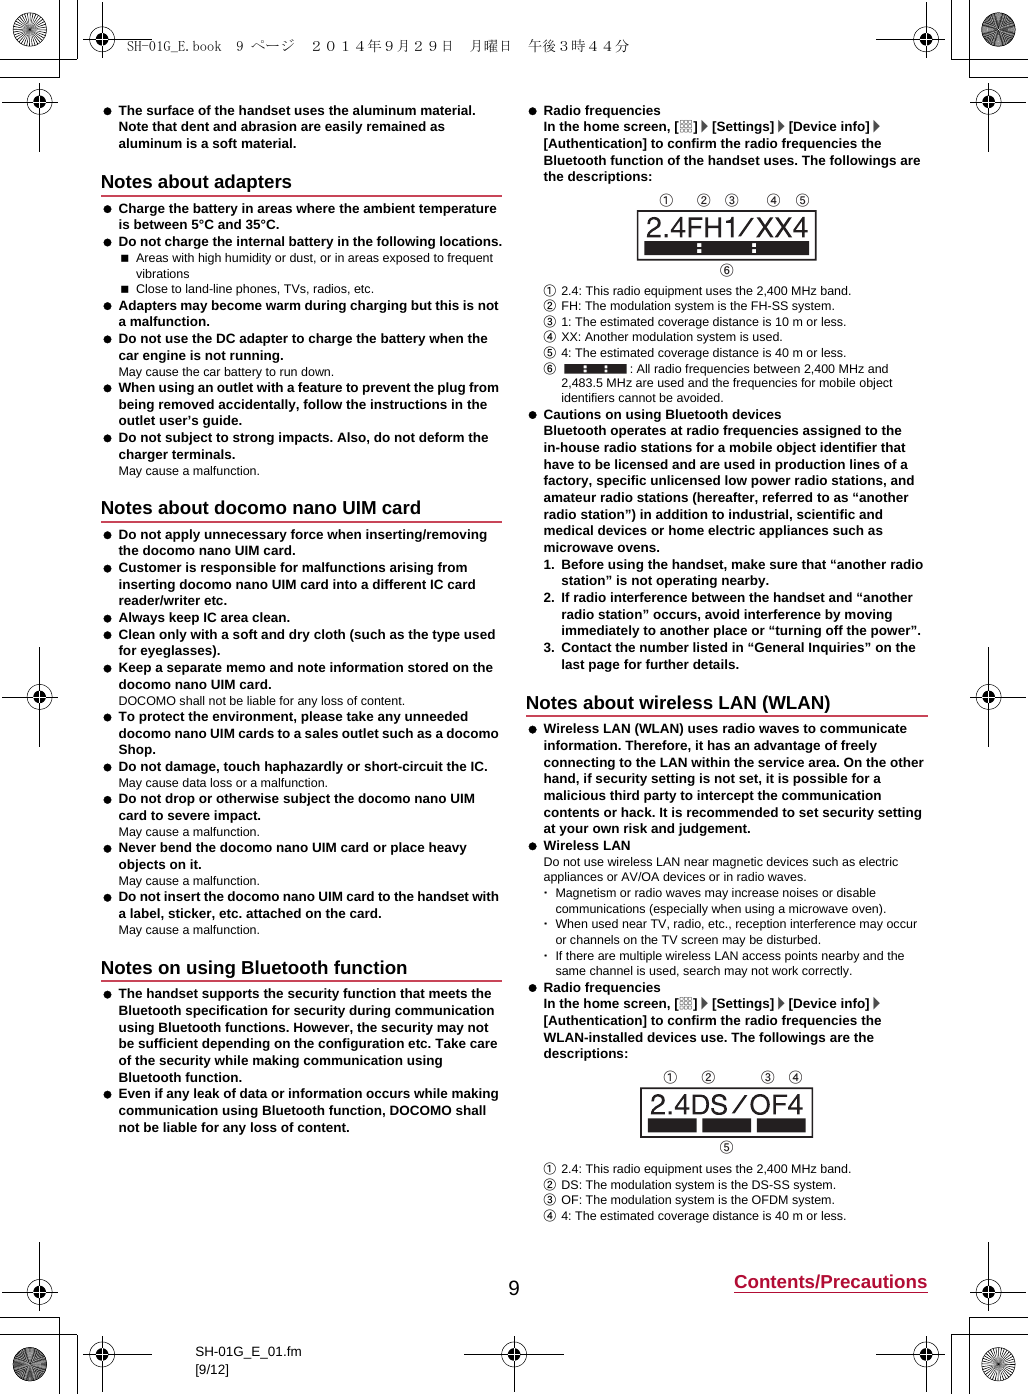 Page 8 of Sharp HRO00212 Smart Phone User Manual